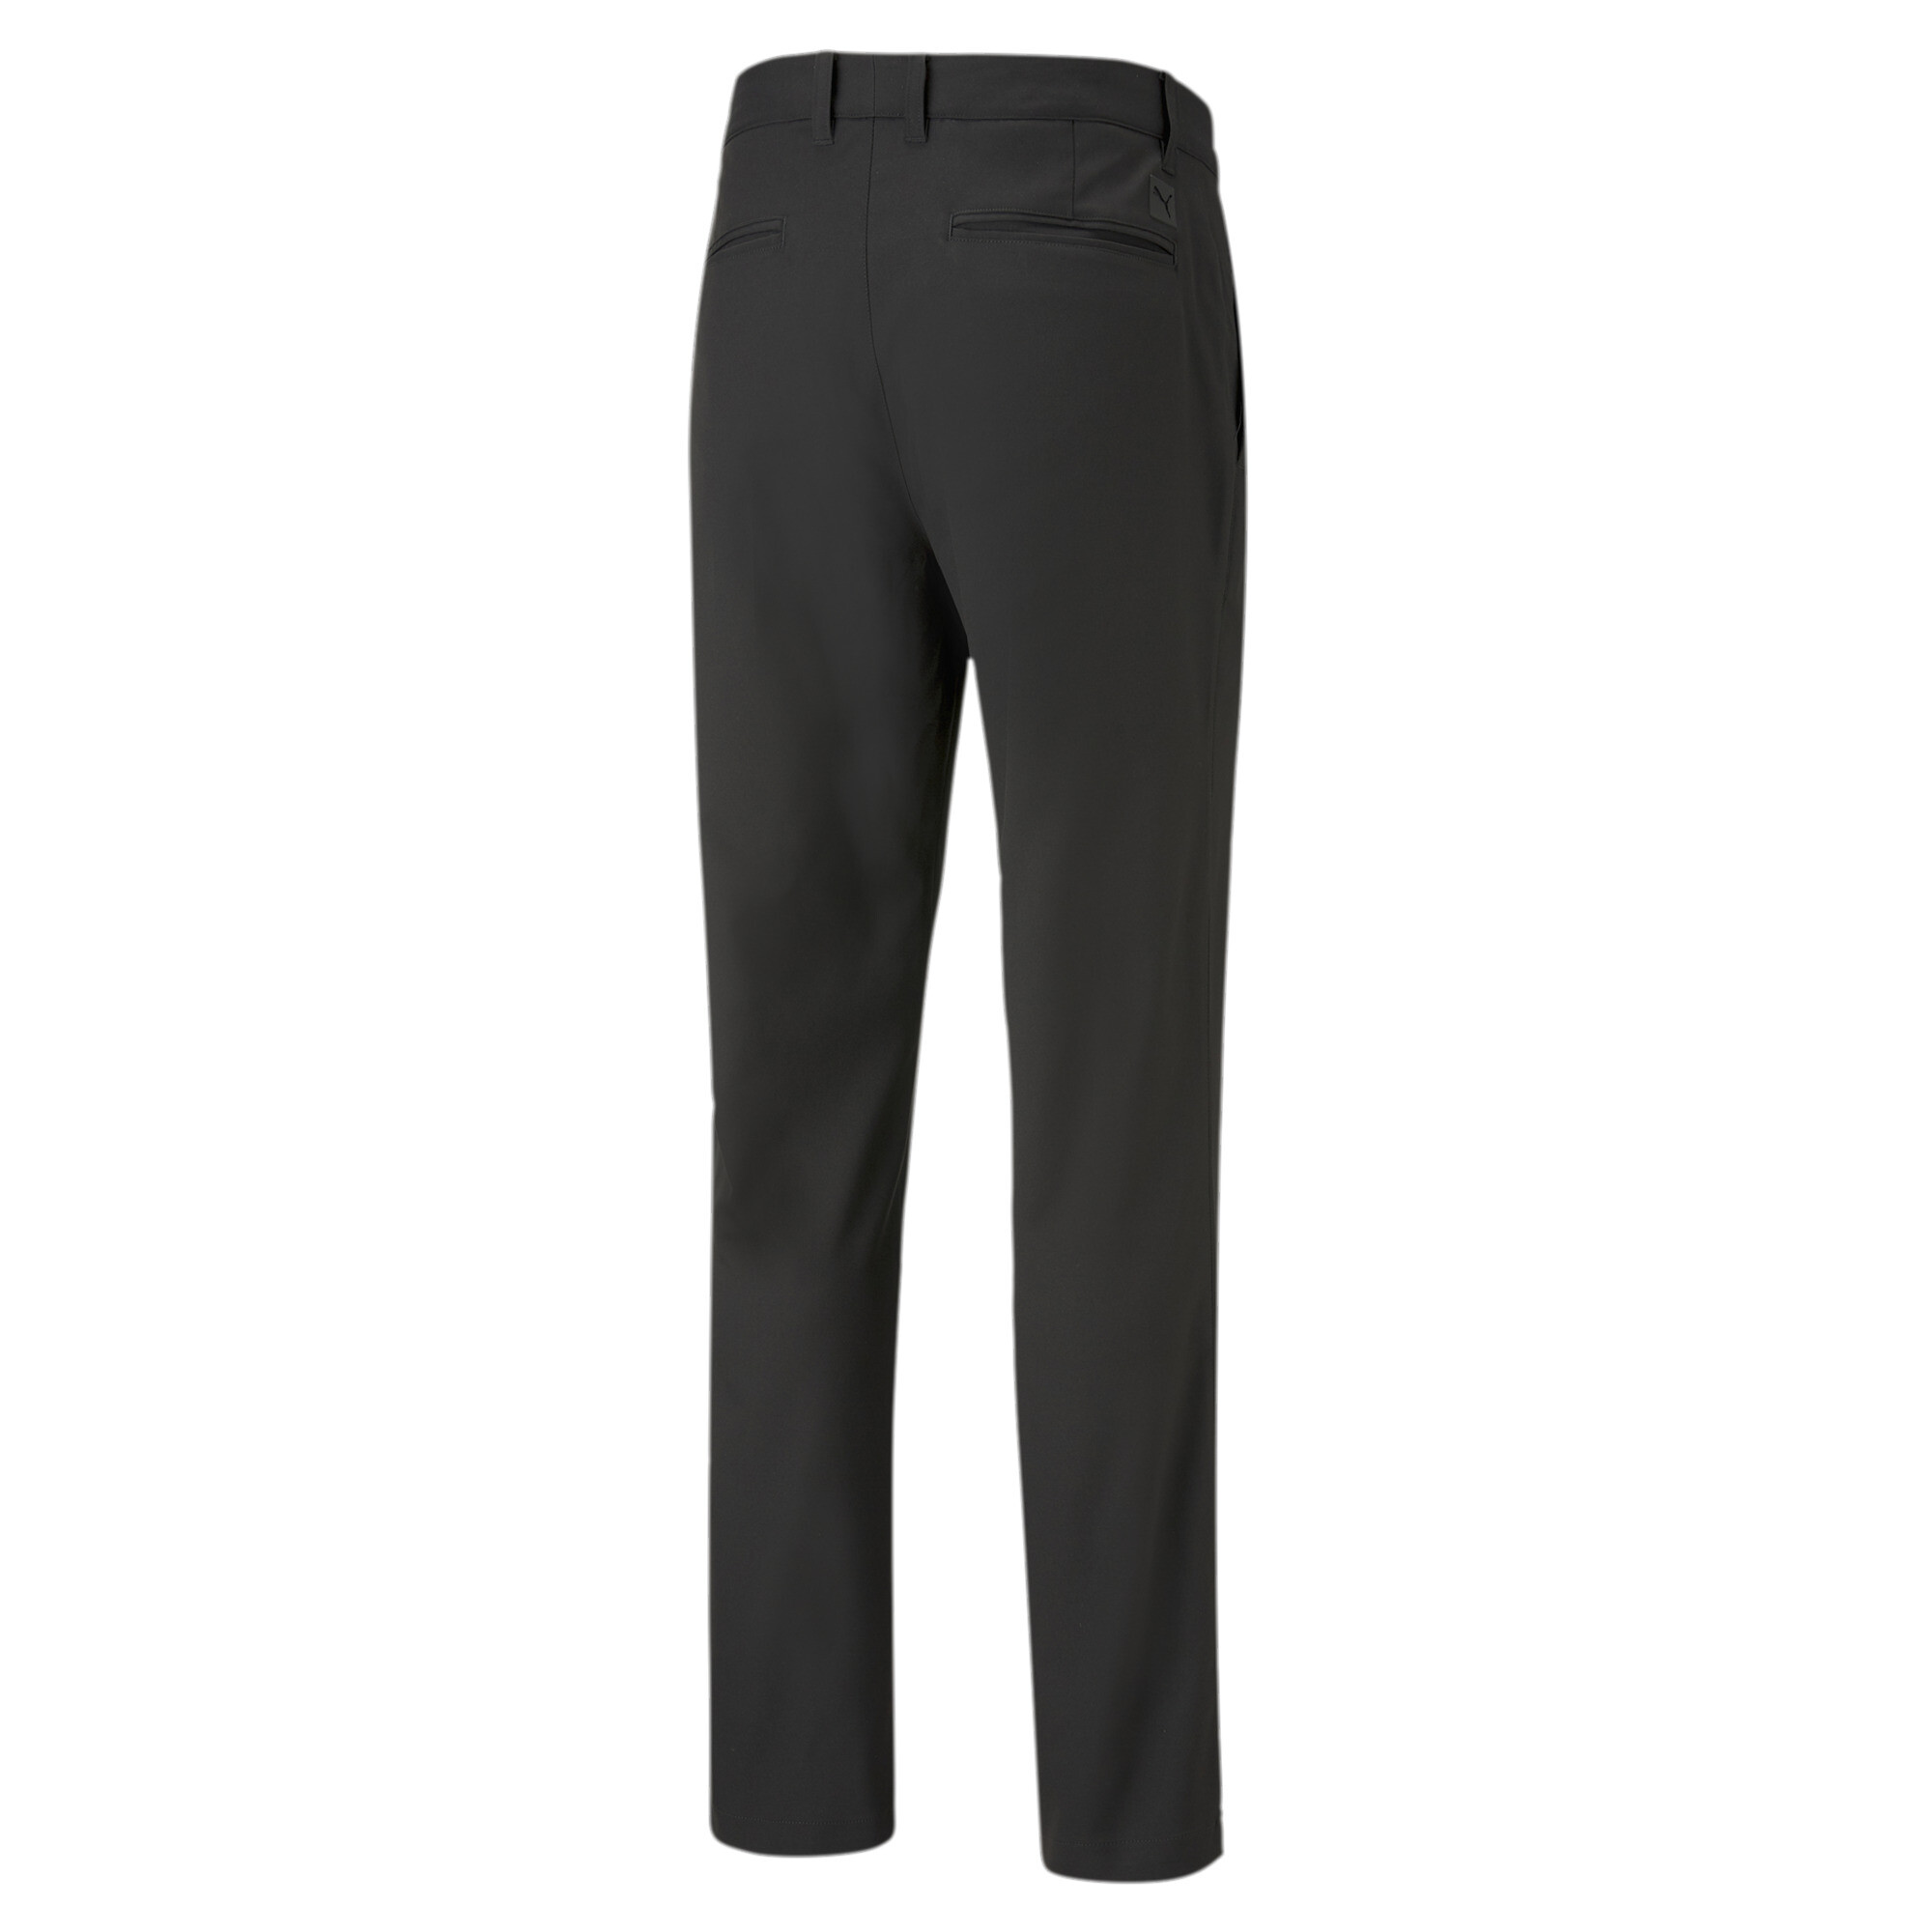 Men's Puma Dealer Golf Pants, Black, Size 28/30, Clothing